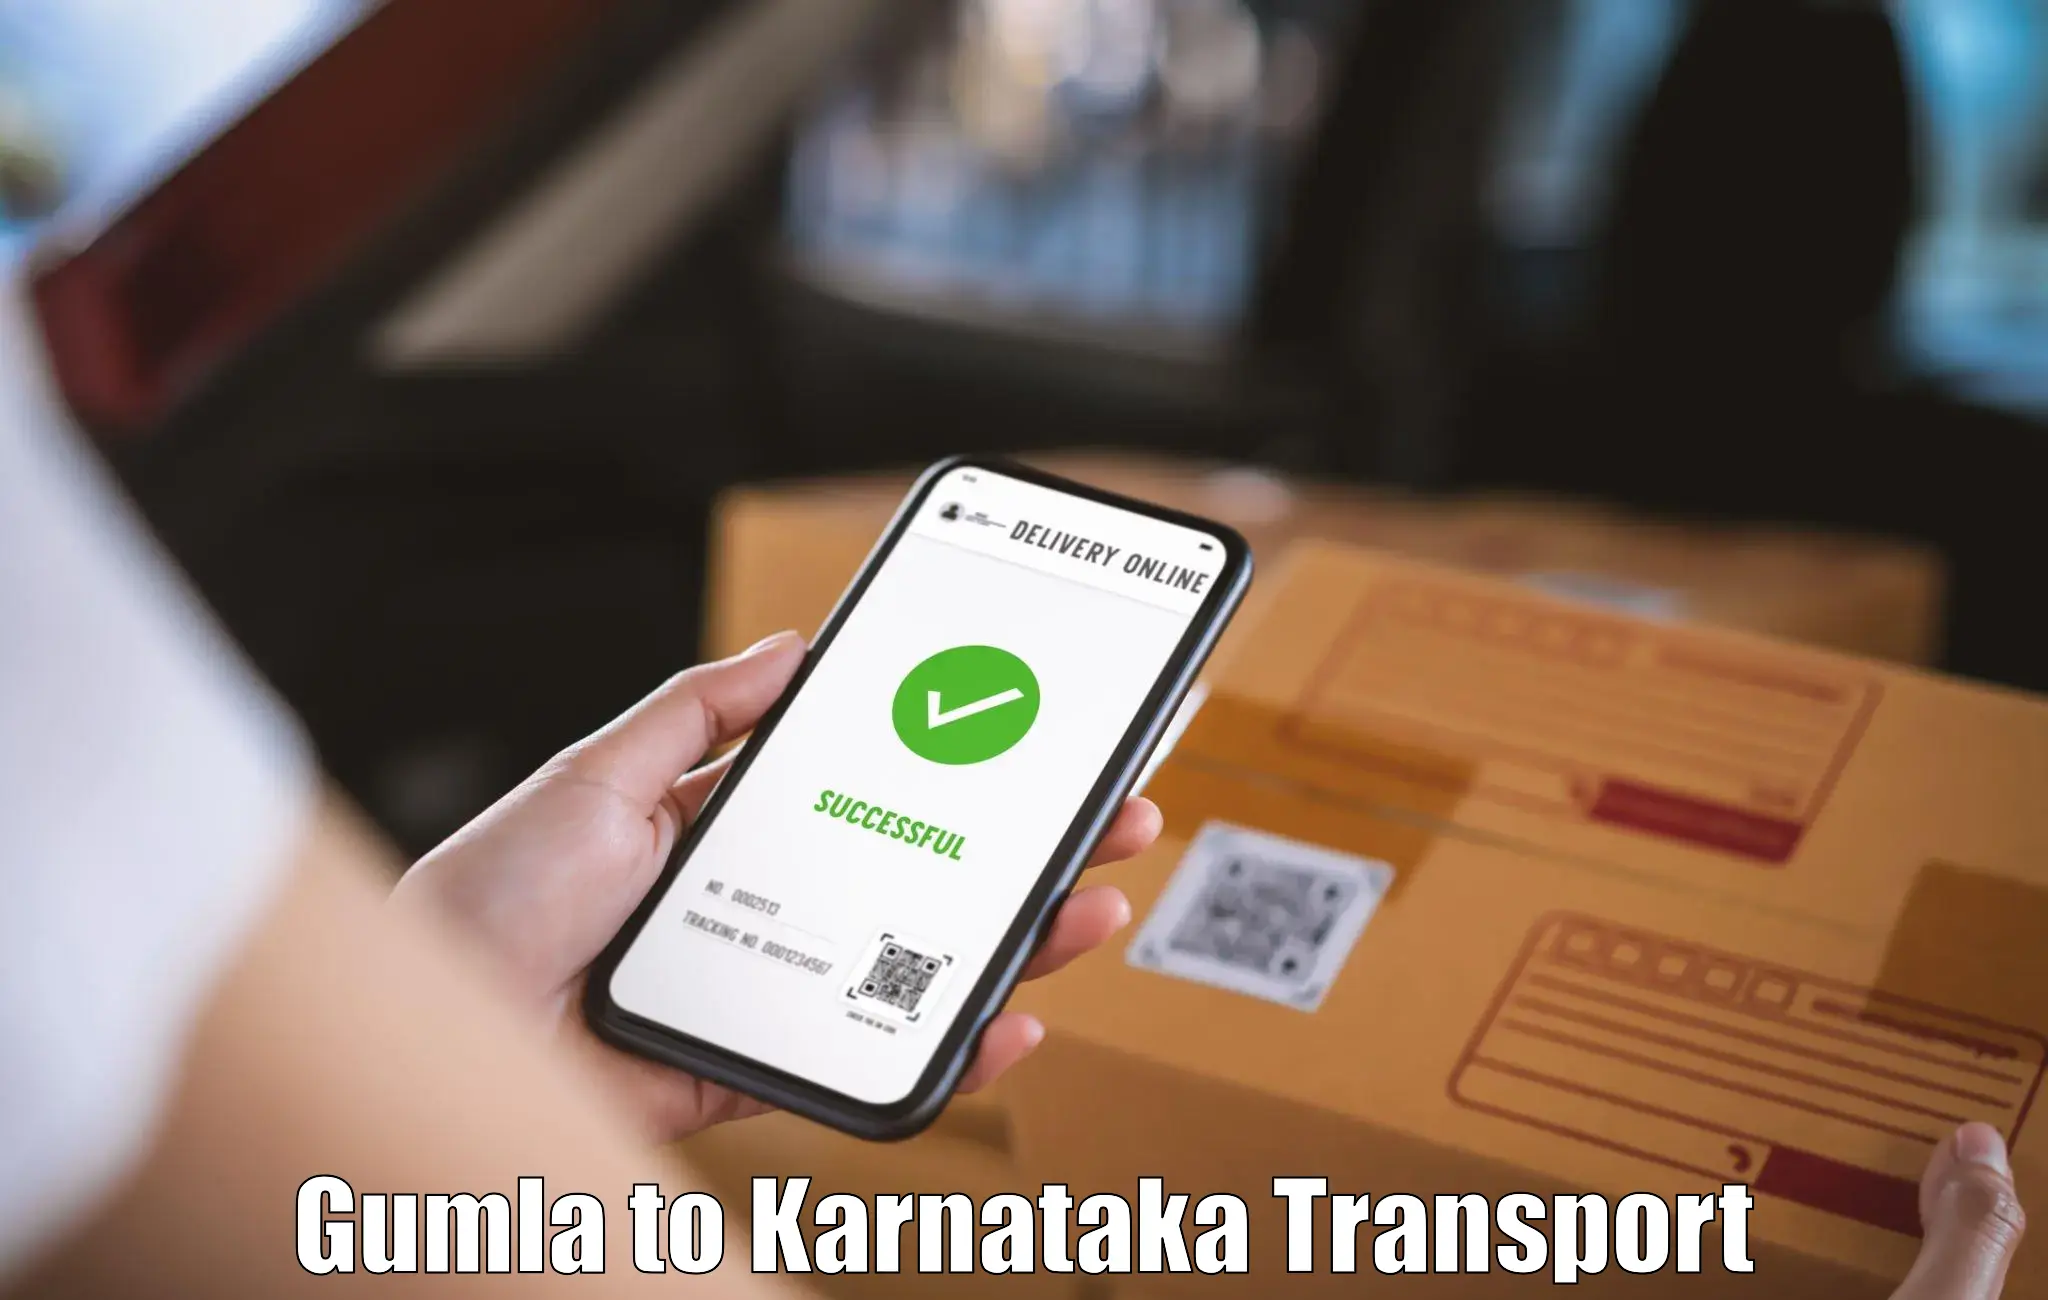 Transport in sharing Gumla to Laxmeshwar